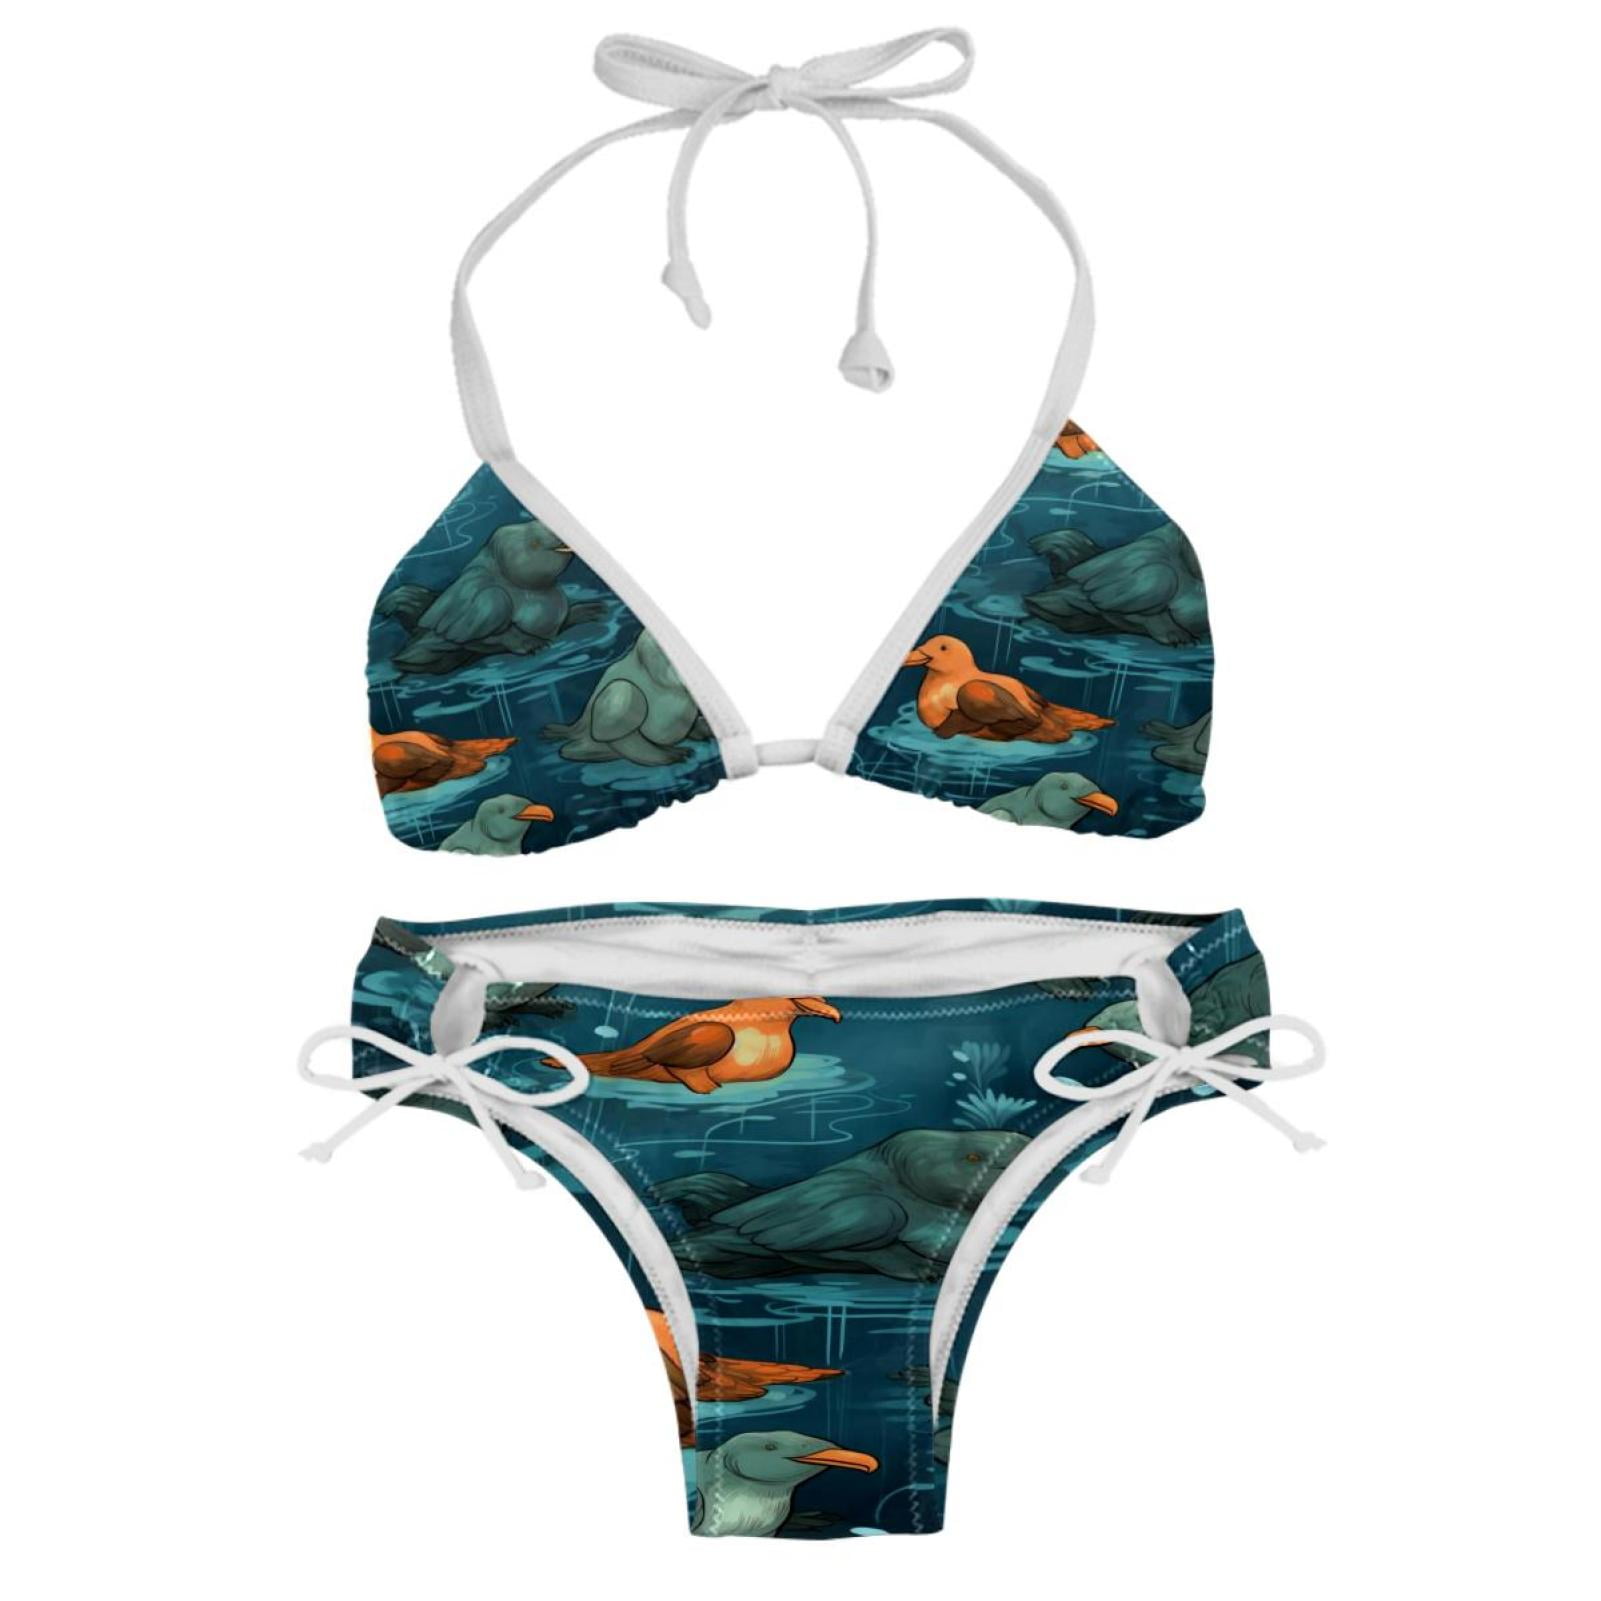 Platypus Women's Swim Suit Bikini Set with Detachable Sponge and ...